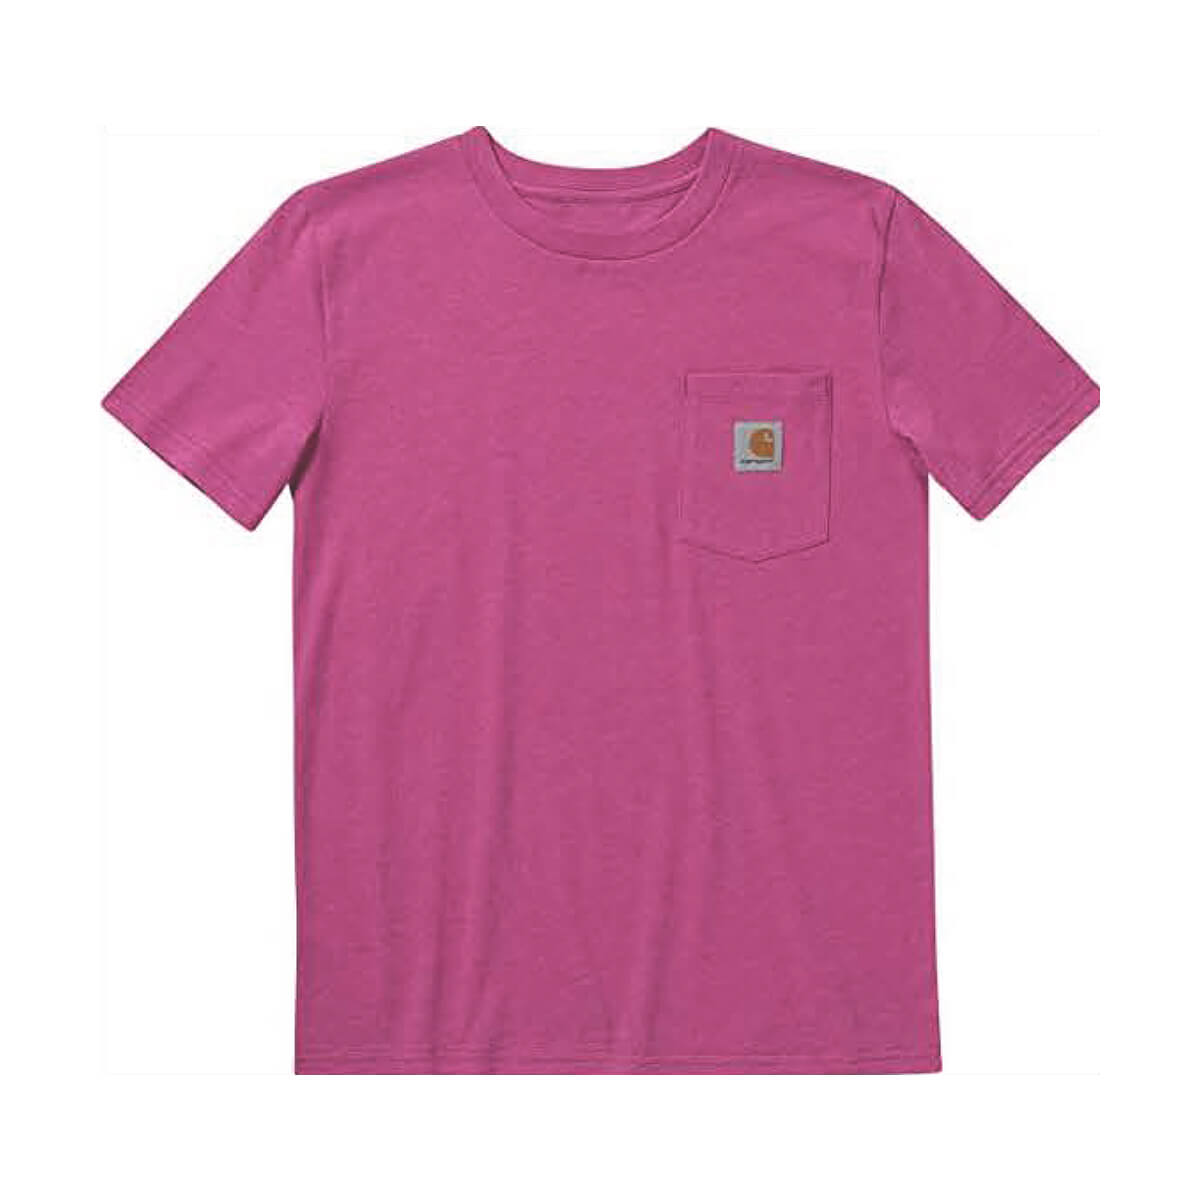 Carhartt Boys Short-Sleeve Pocket T-Shirt - Pink